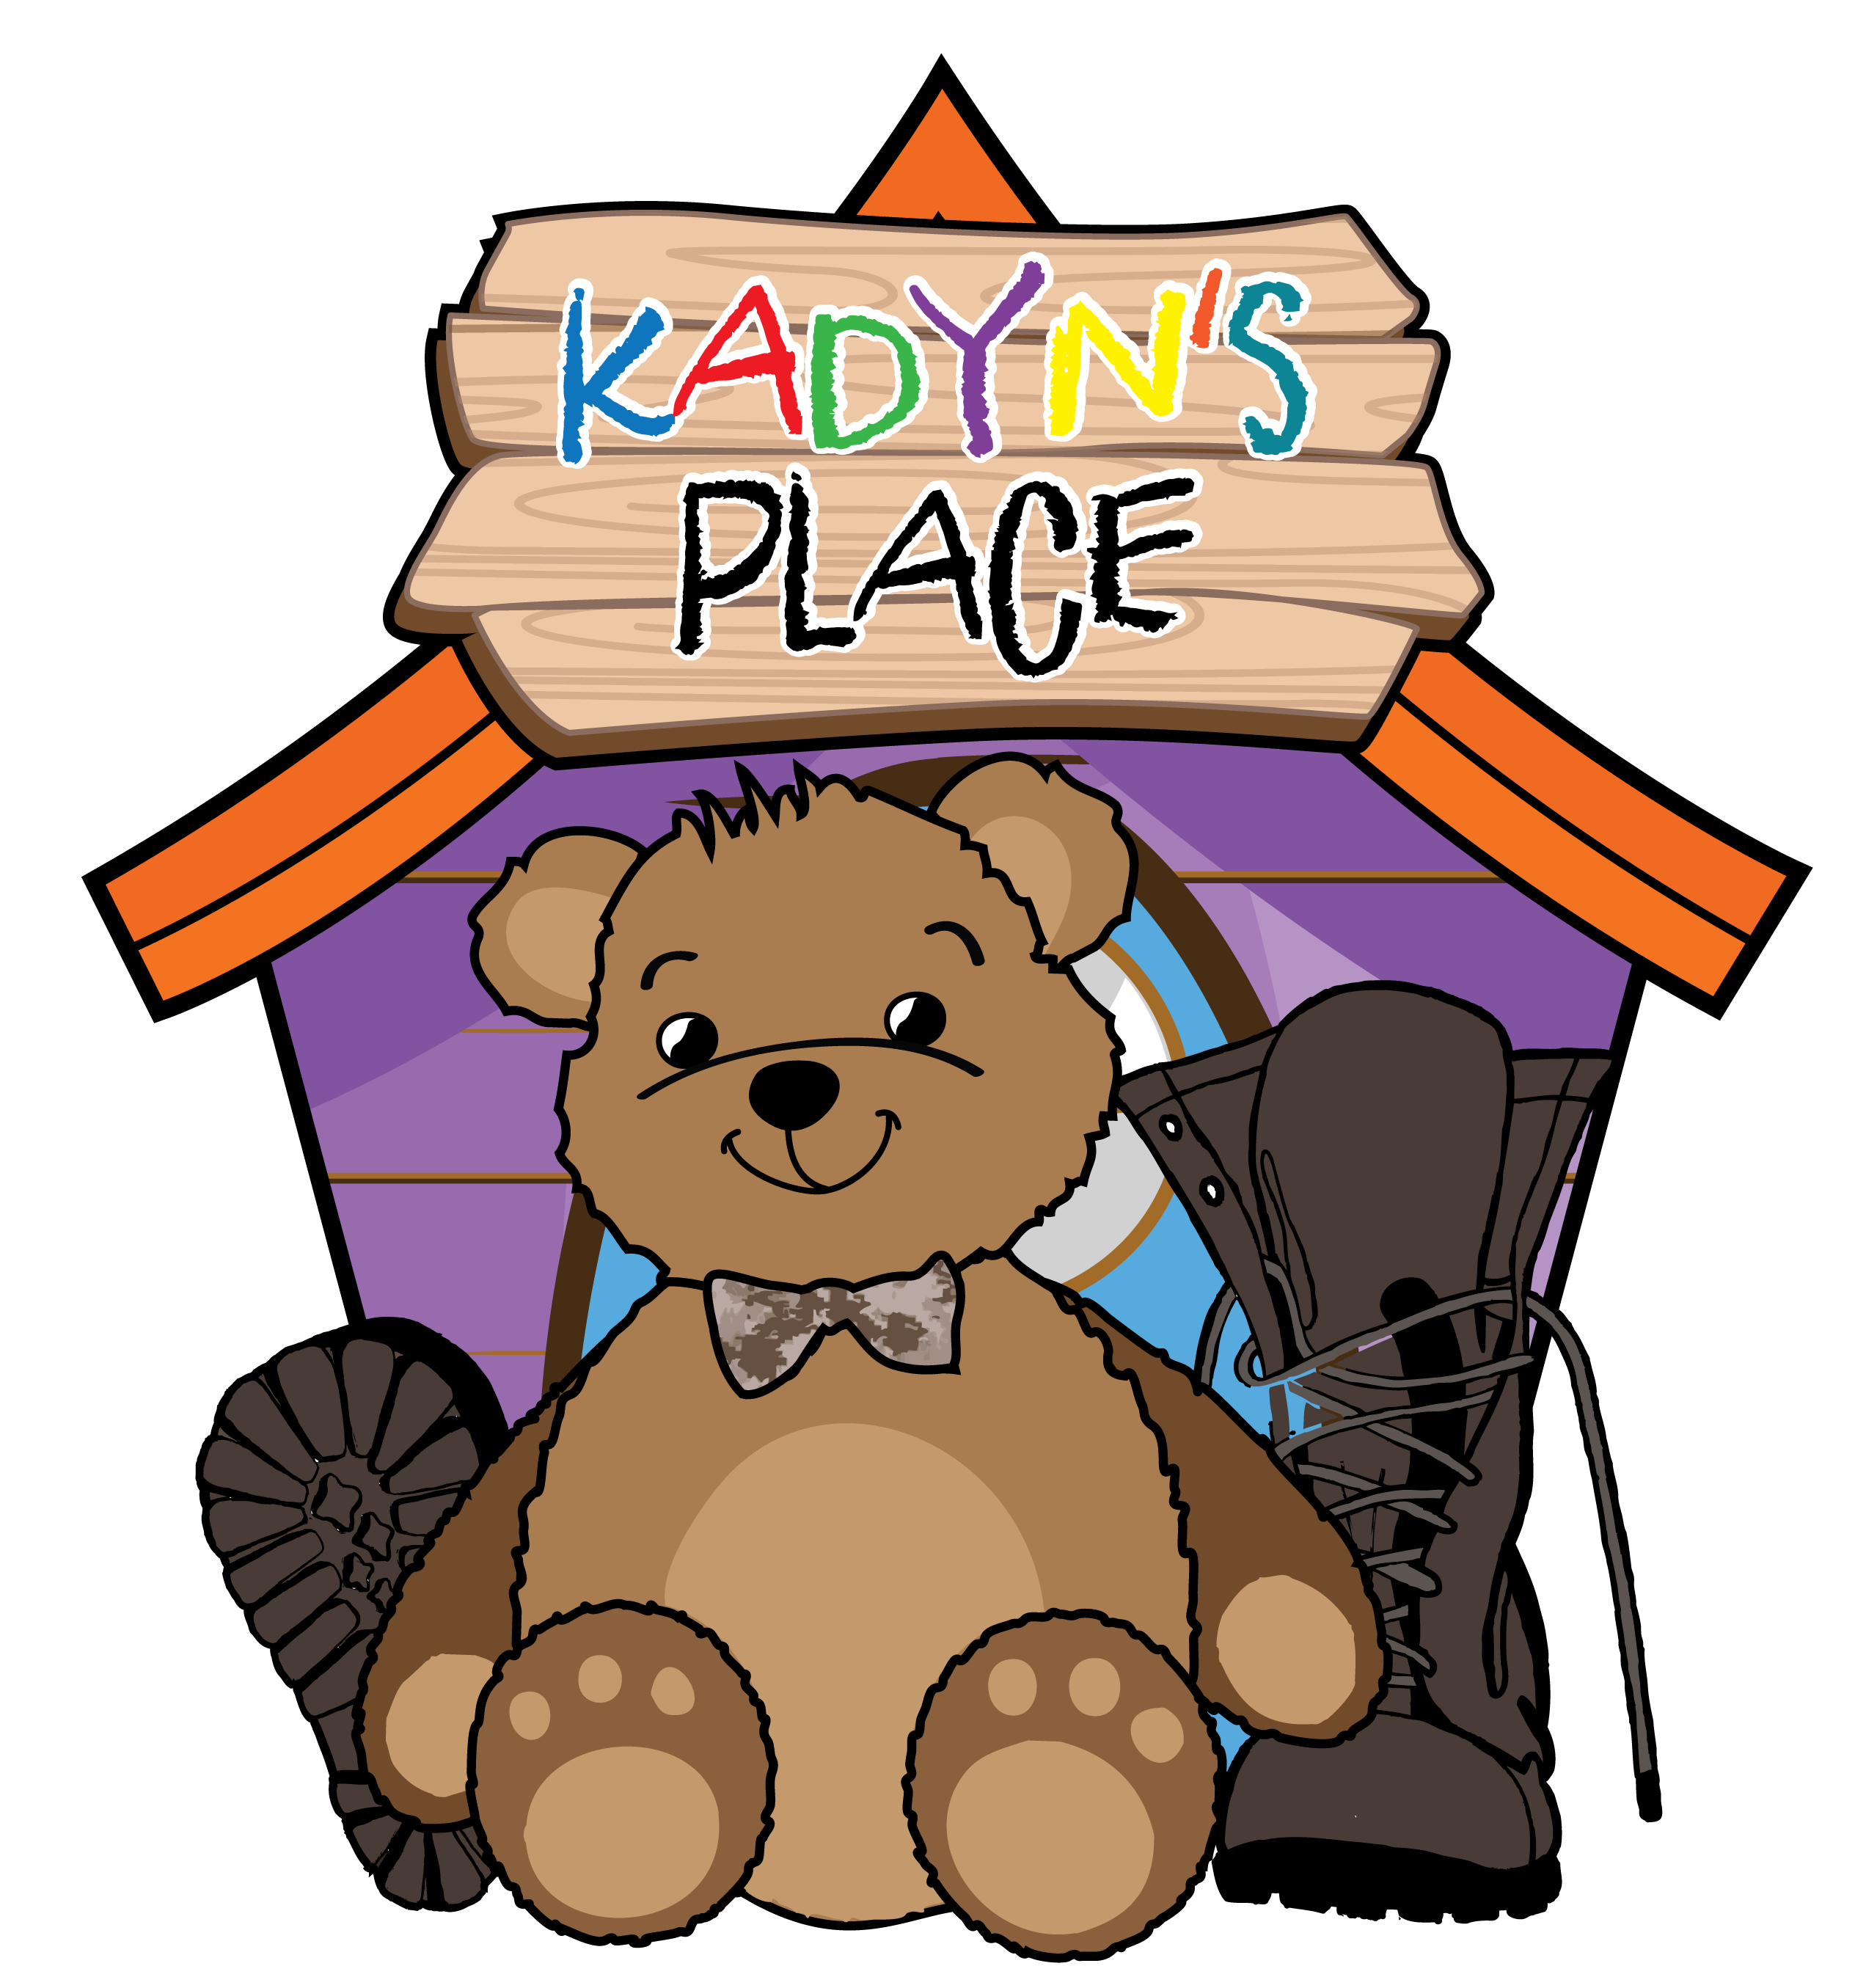 Kadyn’s Place